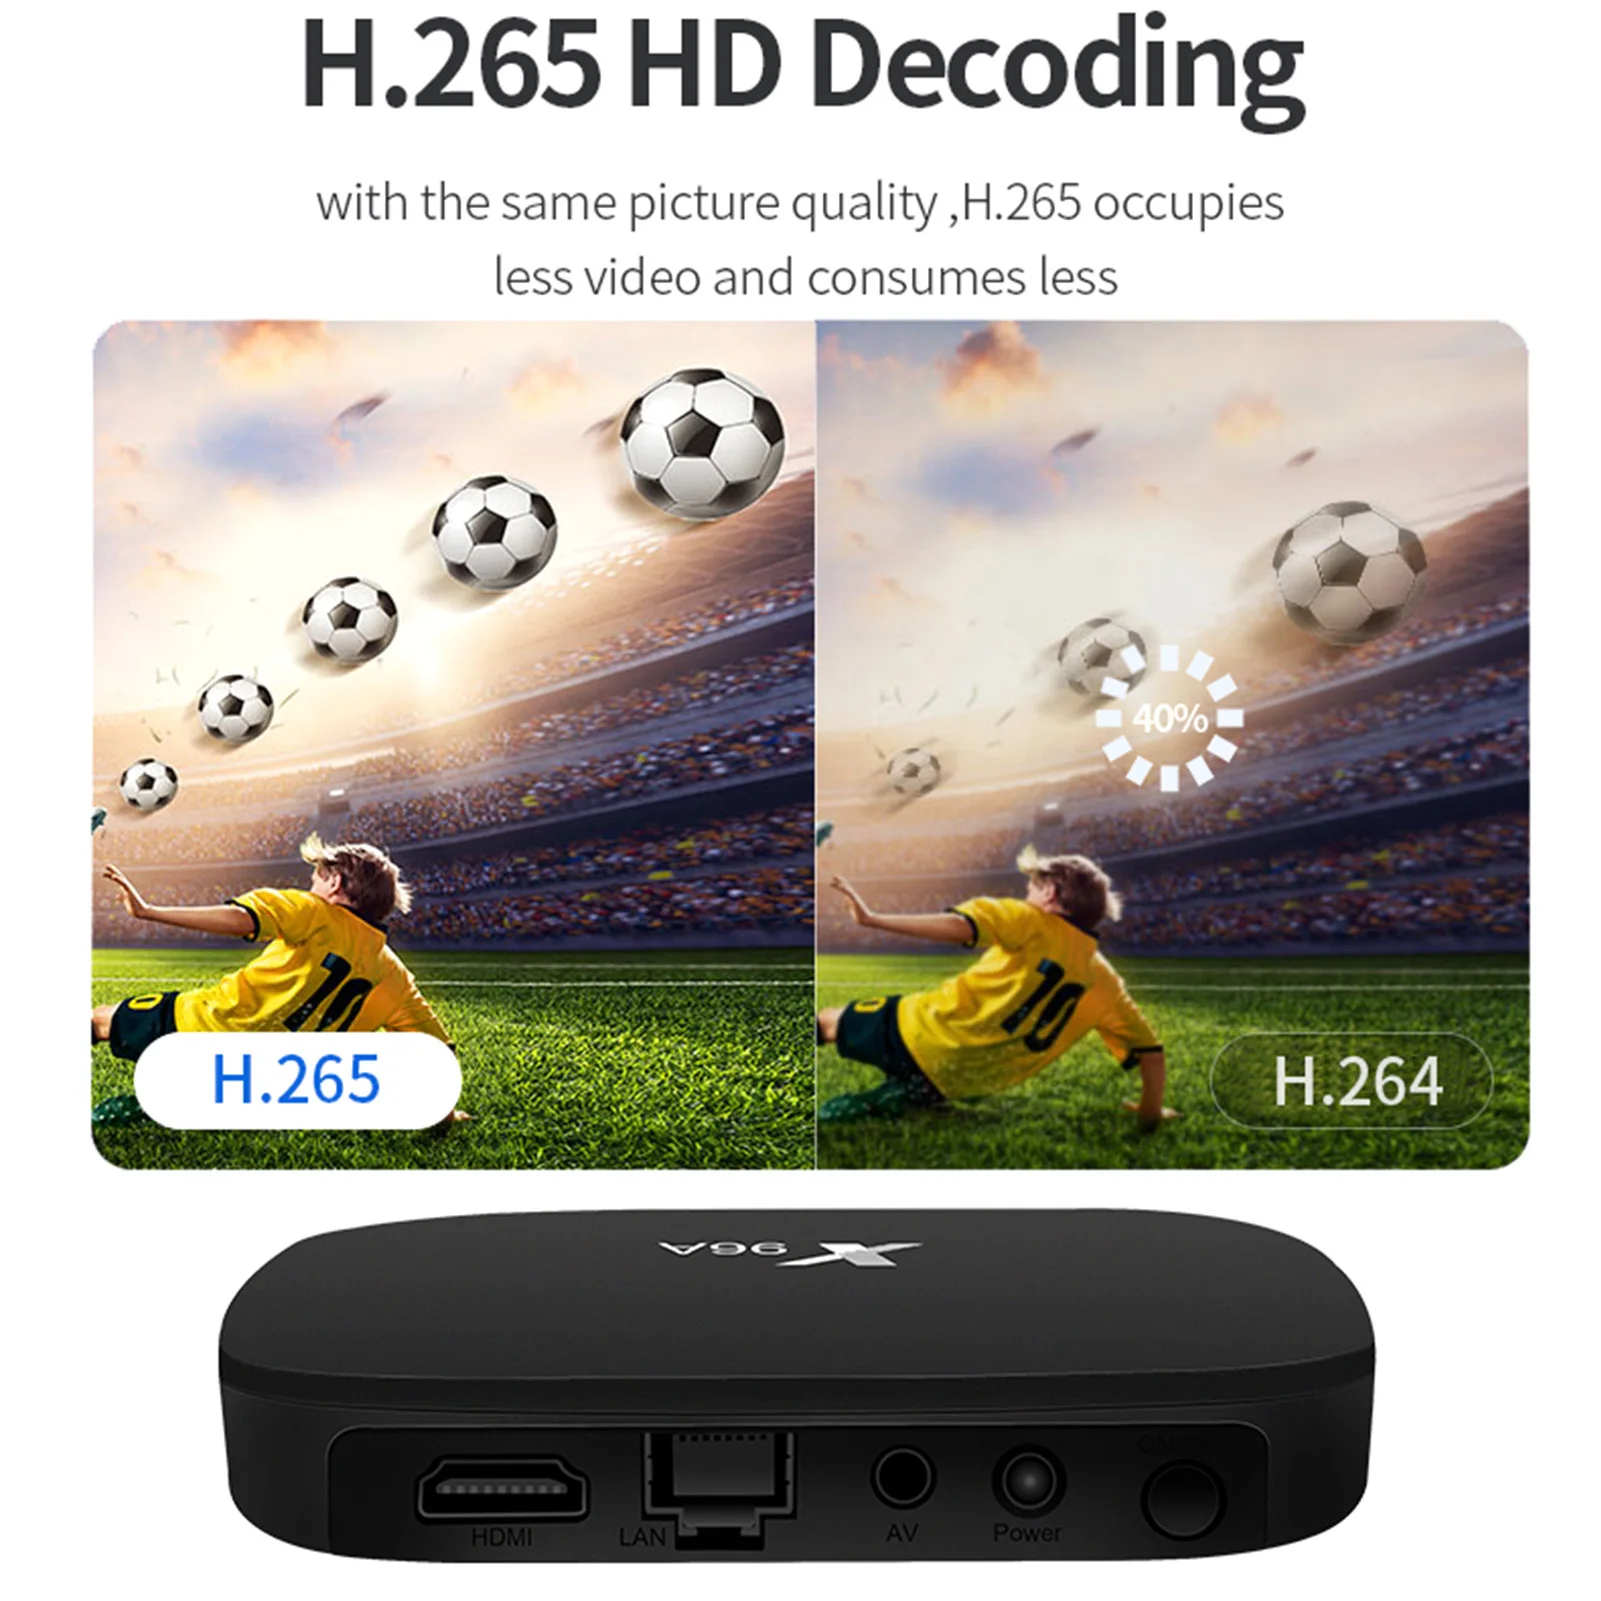 

TV Box Android 10.0 Smart Box 2GB RAM 16GB ROM Amlogic S905 Quad-Core 64bit Cortex-A53 Support 2.4/5GHz WiFi 4K UHD TV Reciver